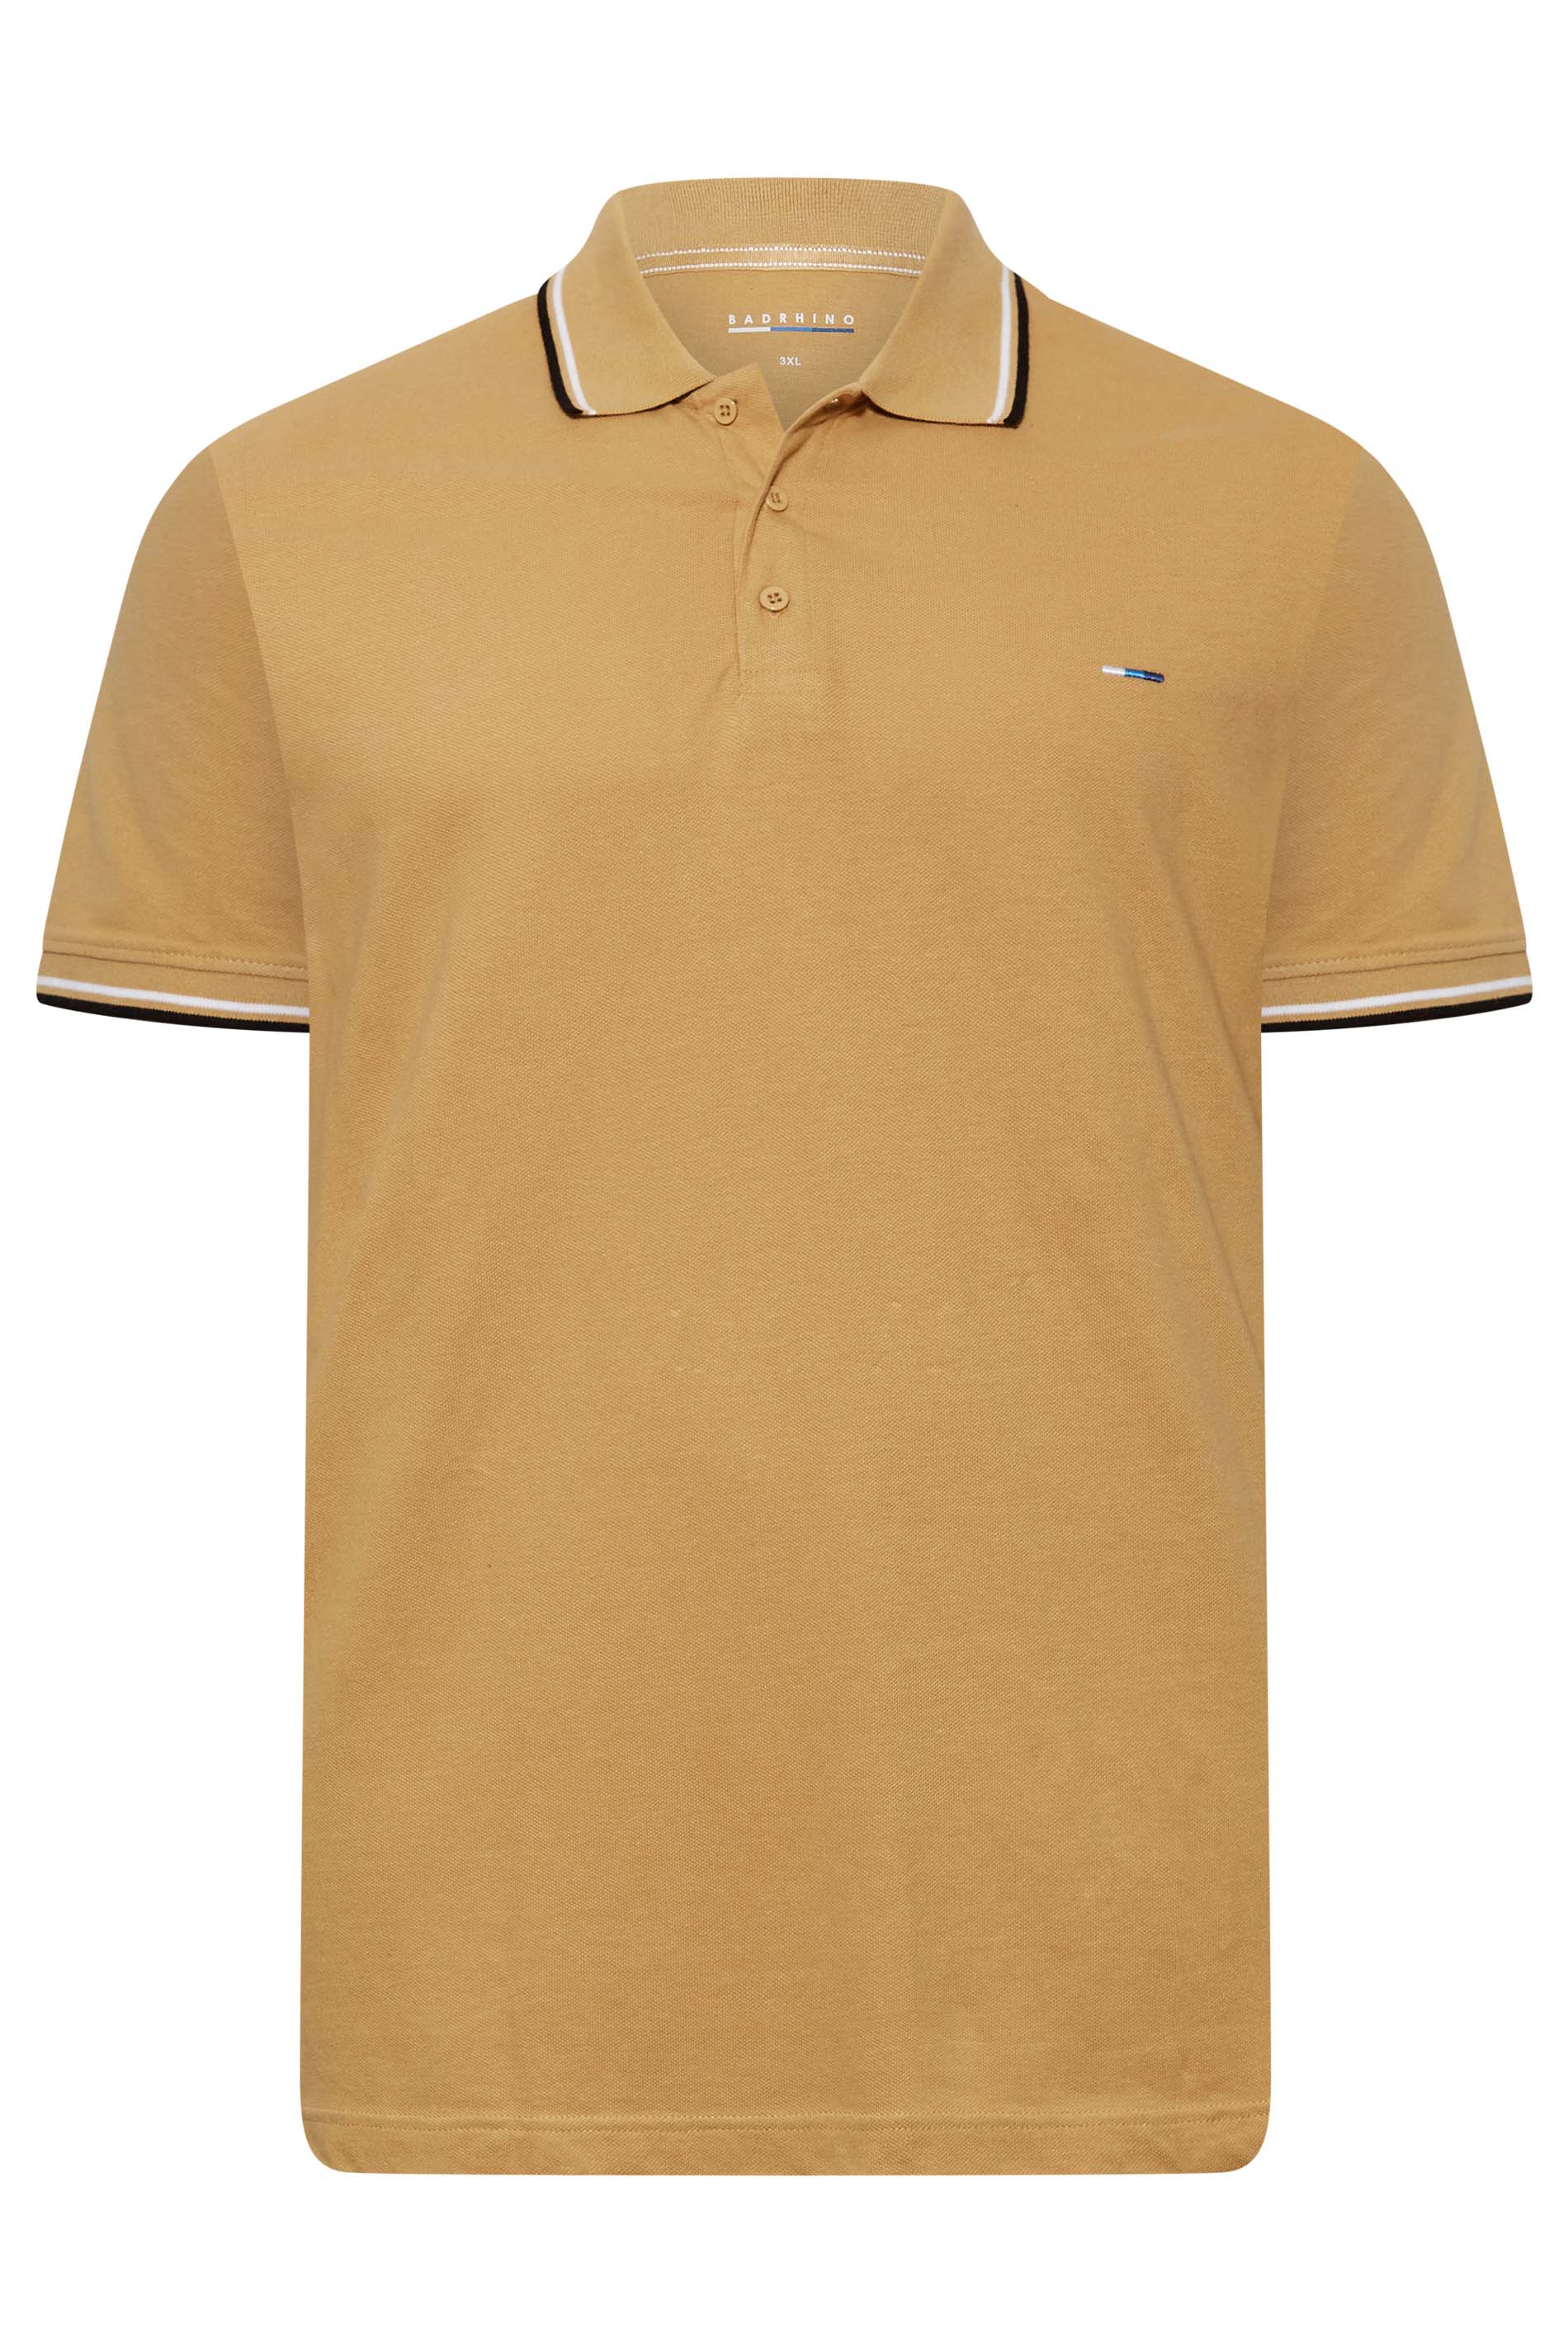 BadRhino Beige Brown Essential Tipped Polo Shirt | BadRhino 3